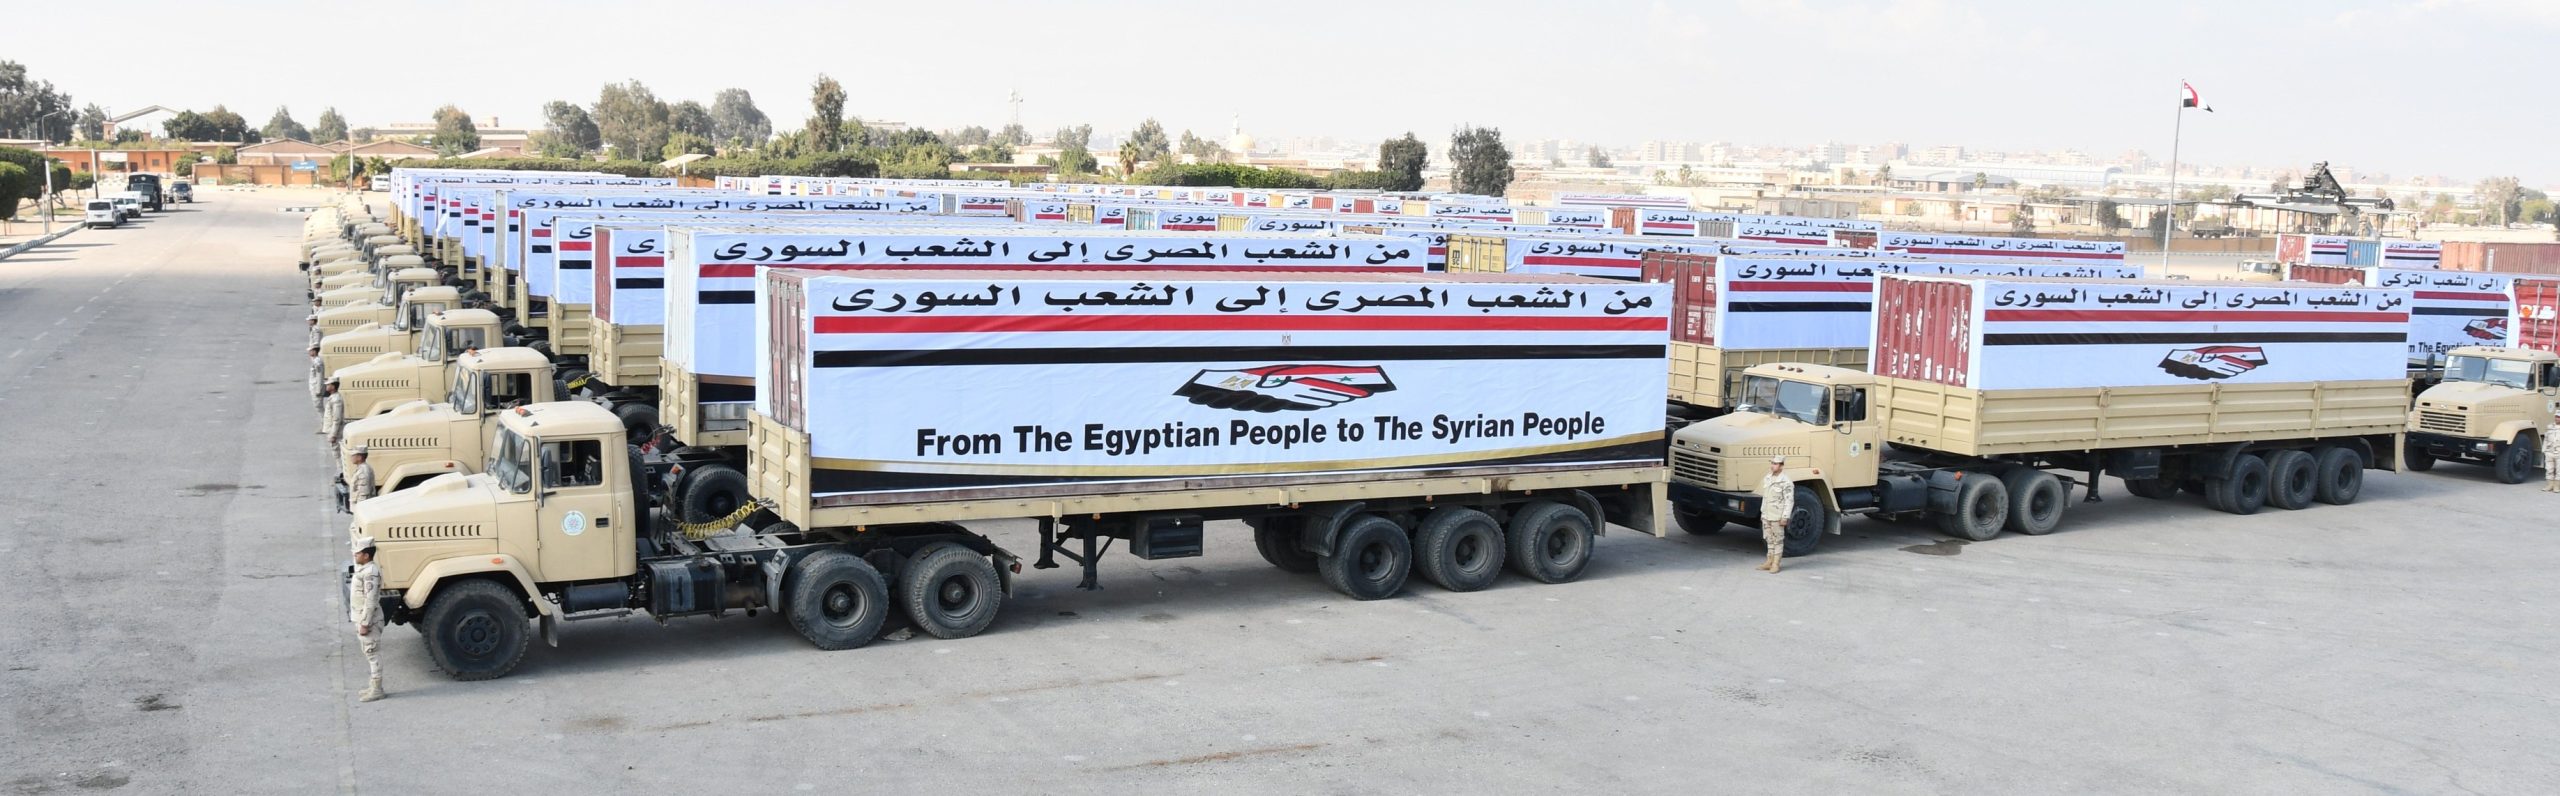 332181567 571073671587772 2959649673558370696 n scaled قافلة مساعدات مصرية لسوريا وتركيا بحراً